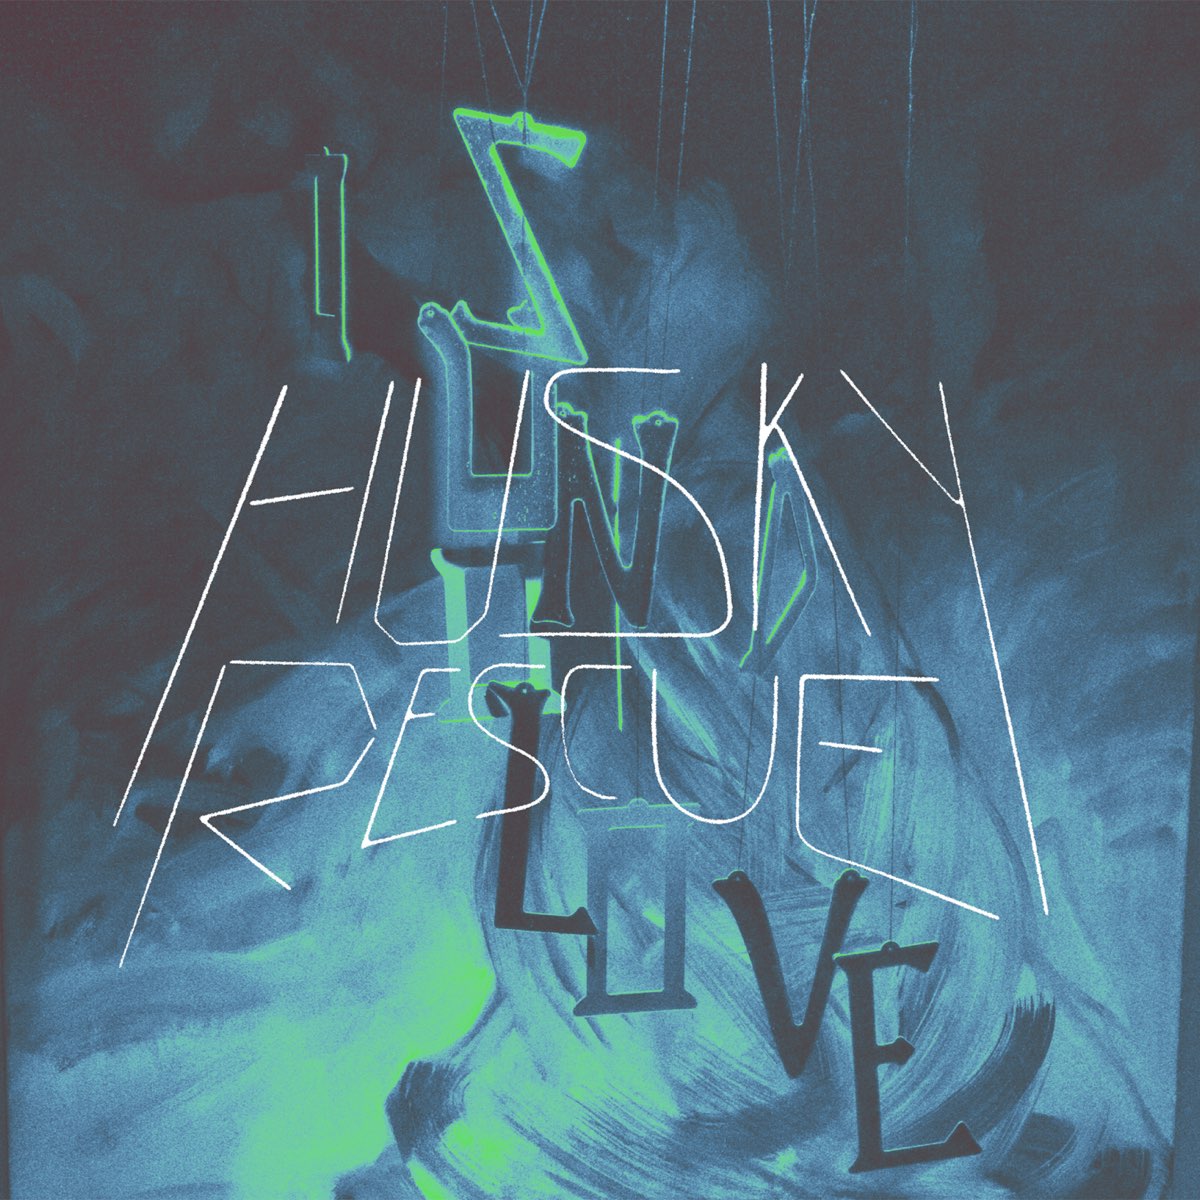 Husky Rescue Sound of Love. Love Sound. Группа Husky Rescue. Husky Rescue - ship of Light. Звуки лов